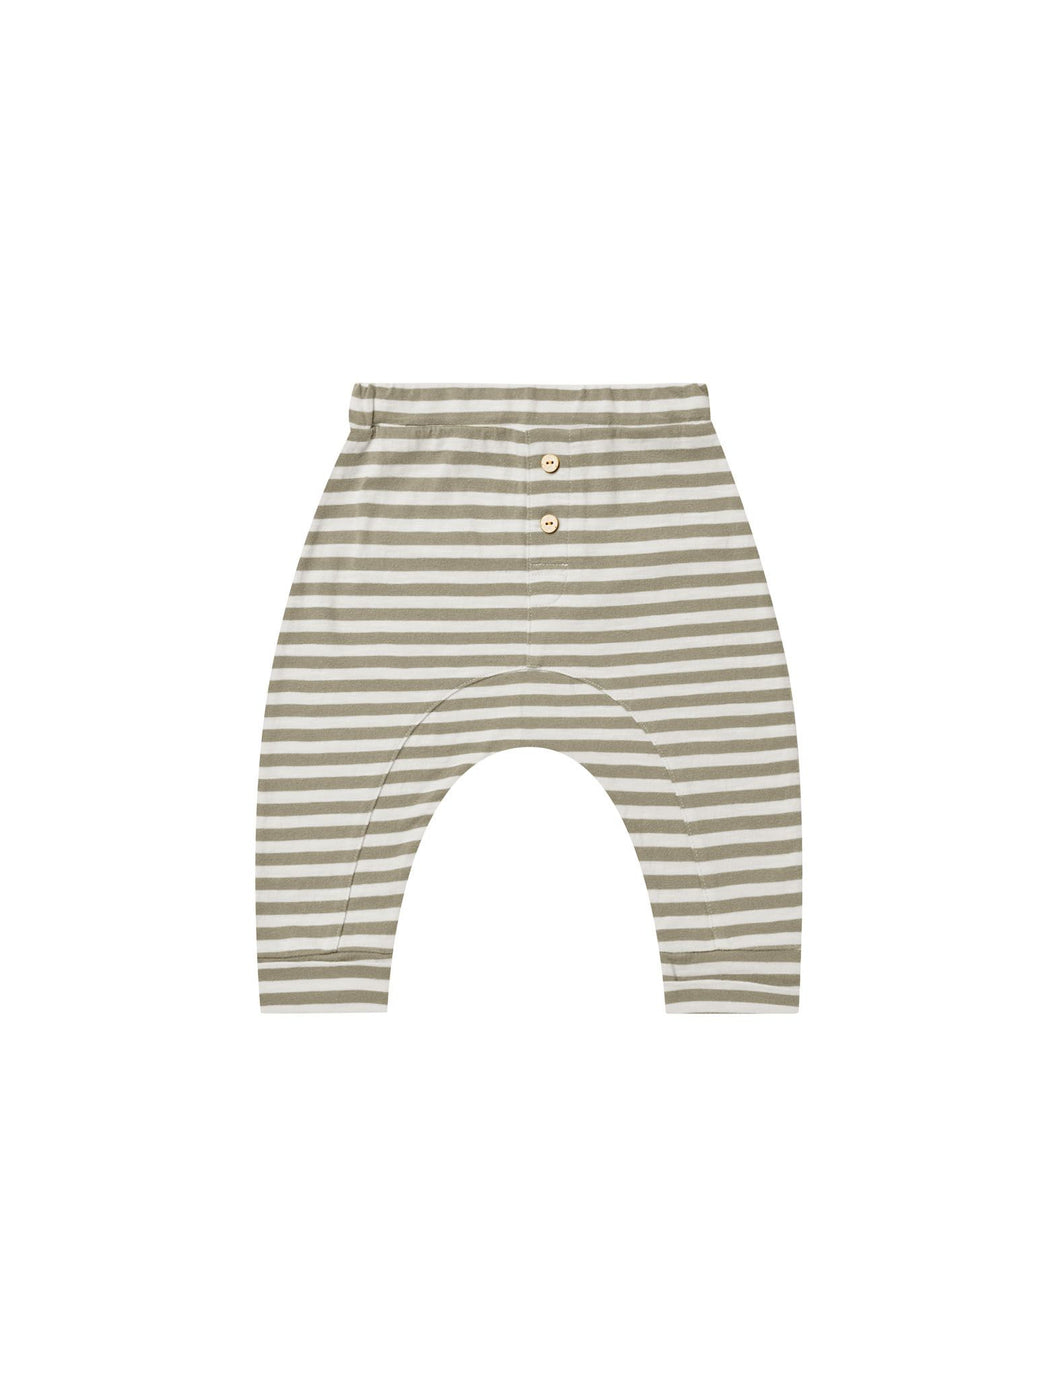 Baby Cru Pant | Fern Stripe